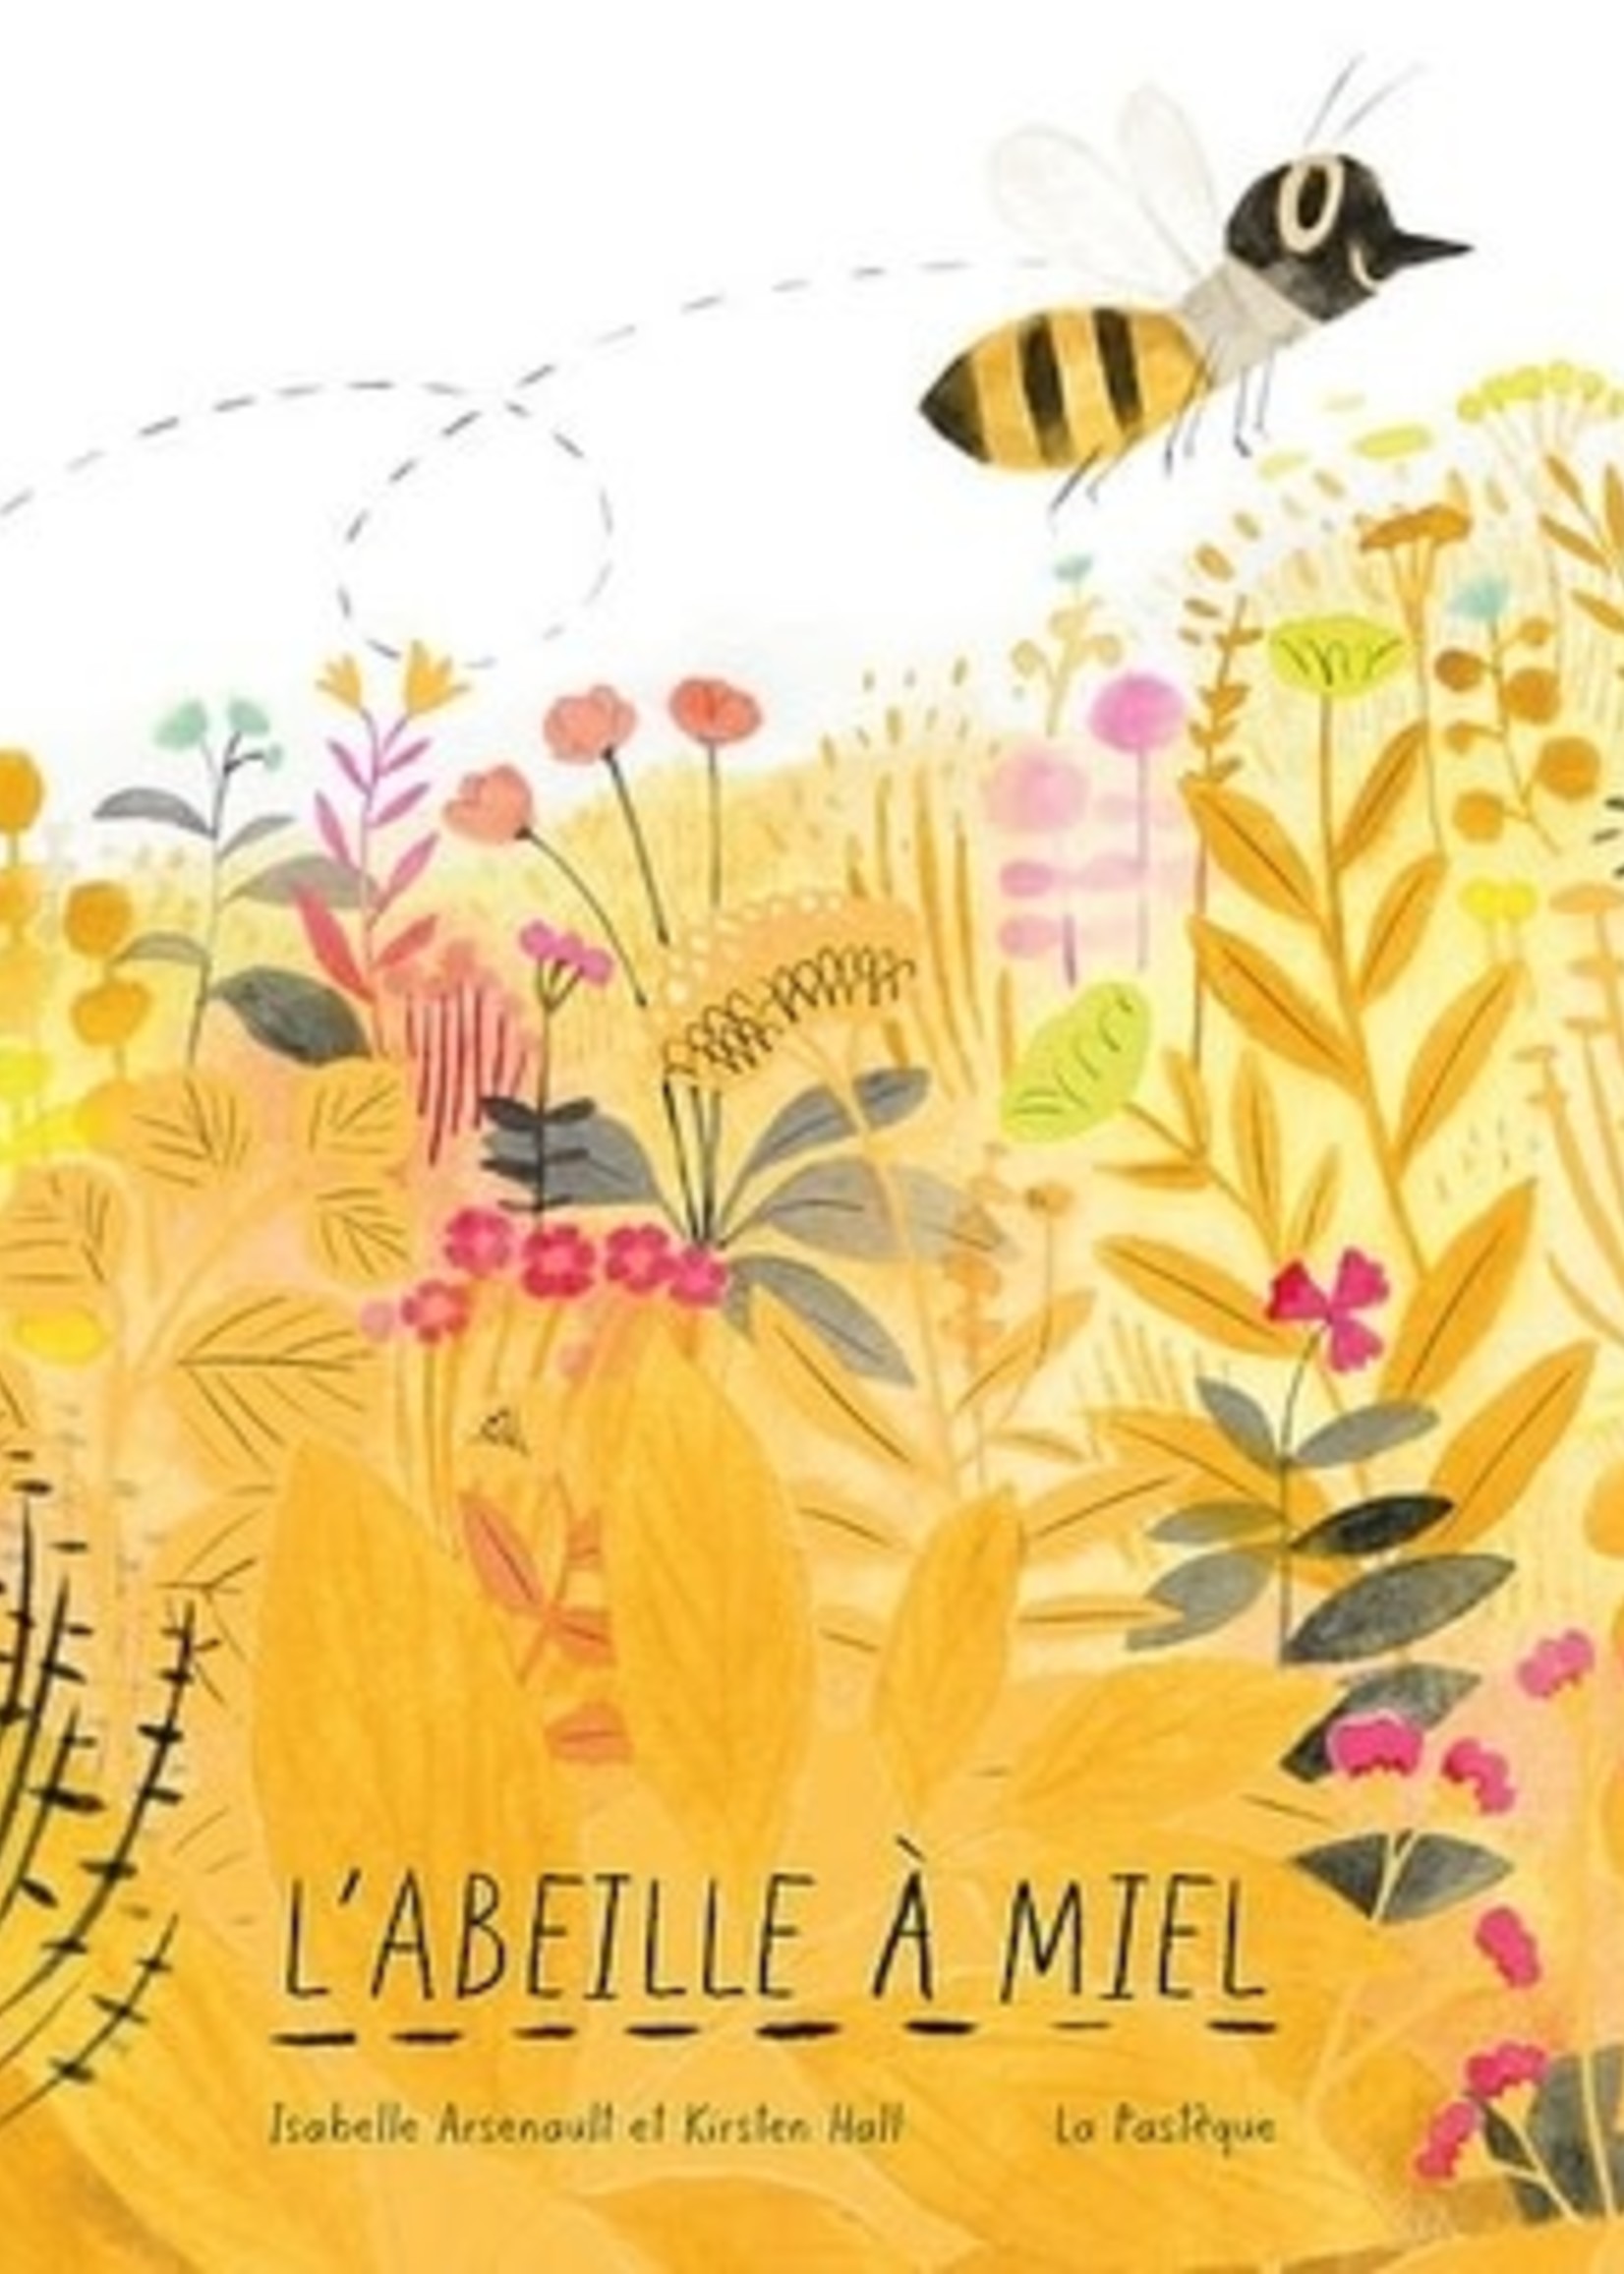 L'Abeille À Miel by Isabelle Arsenault, Kristen Hall